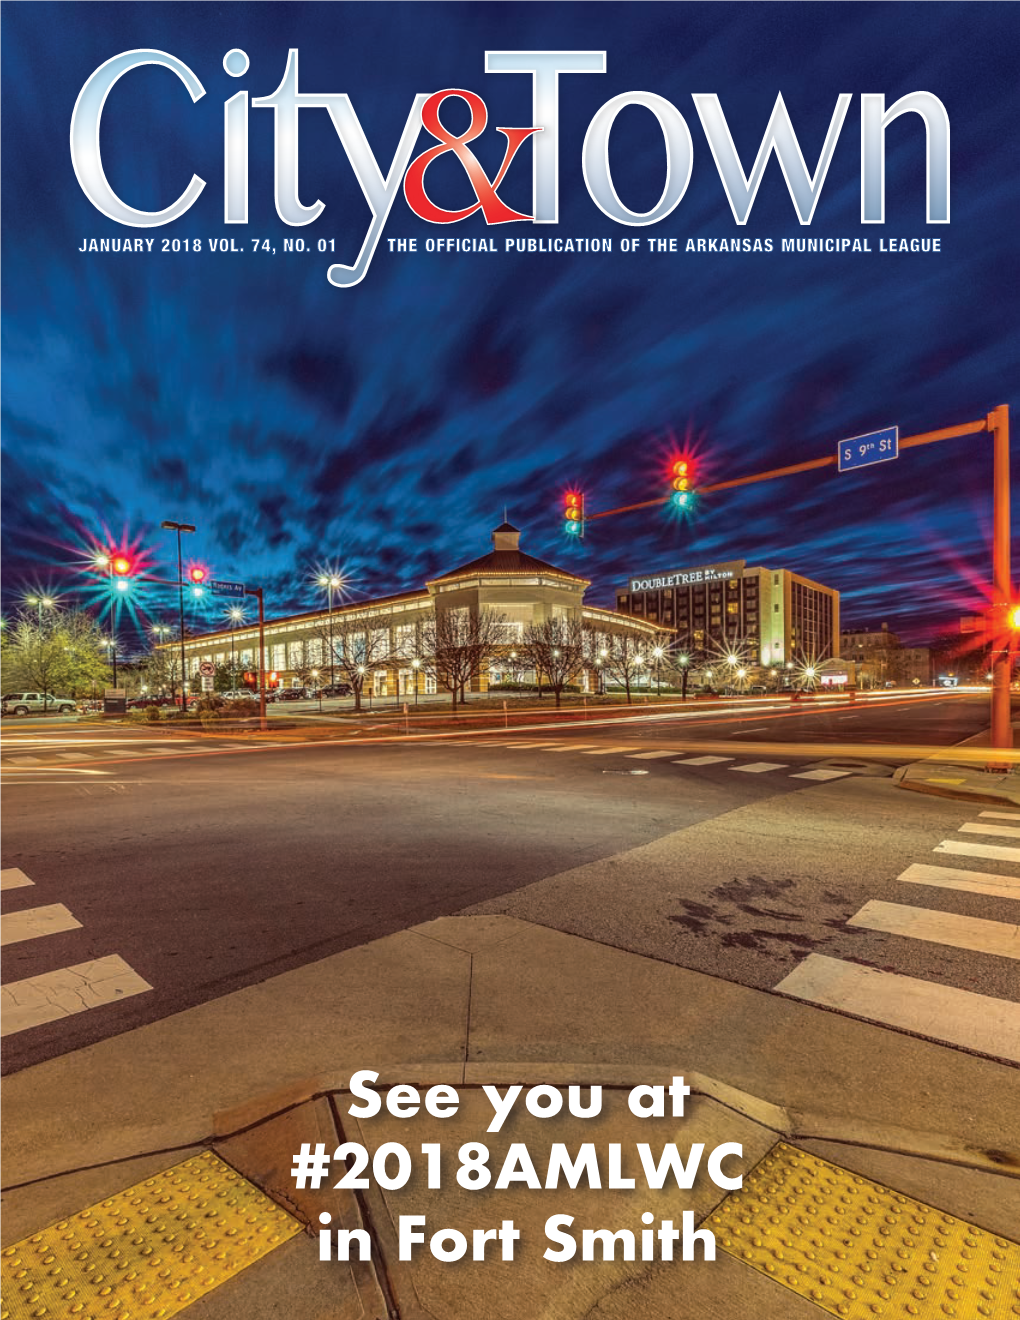 City & Town, January 2018 Vol. 74, No. 01